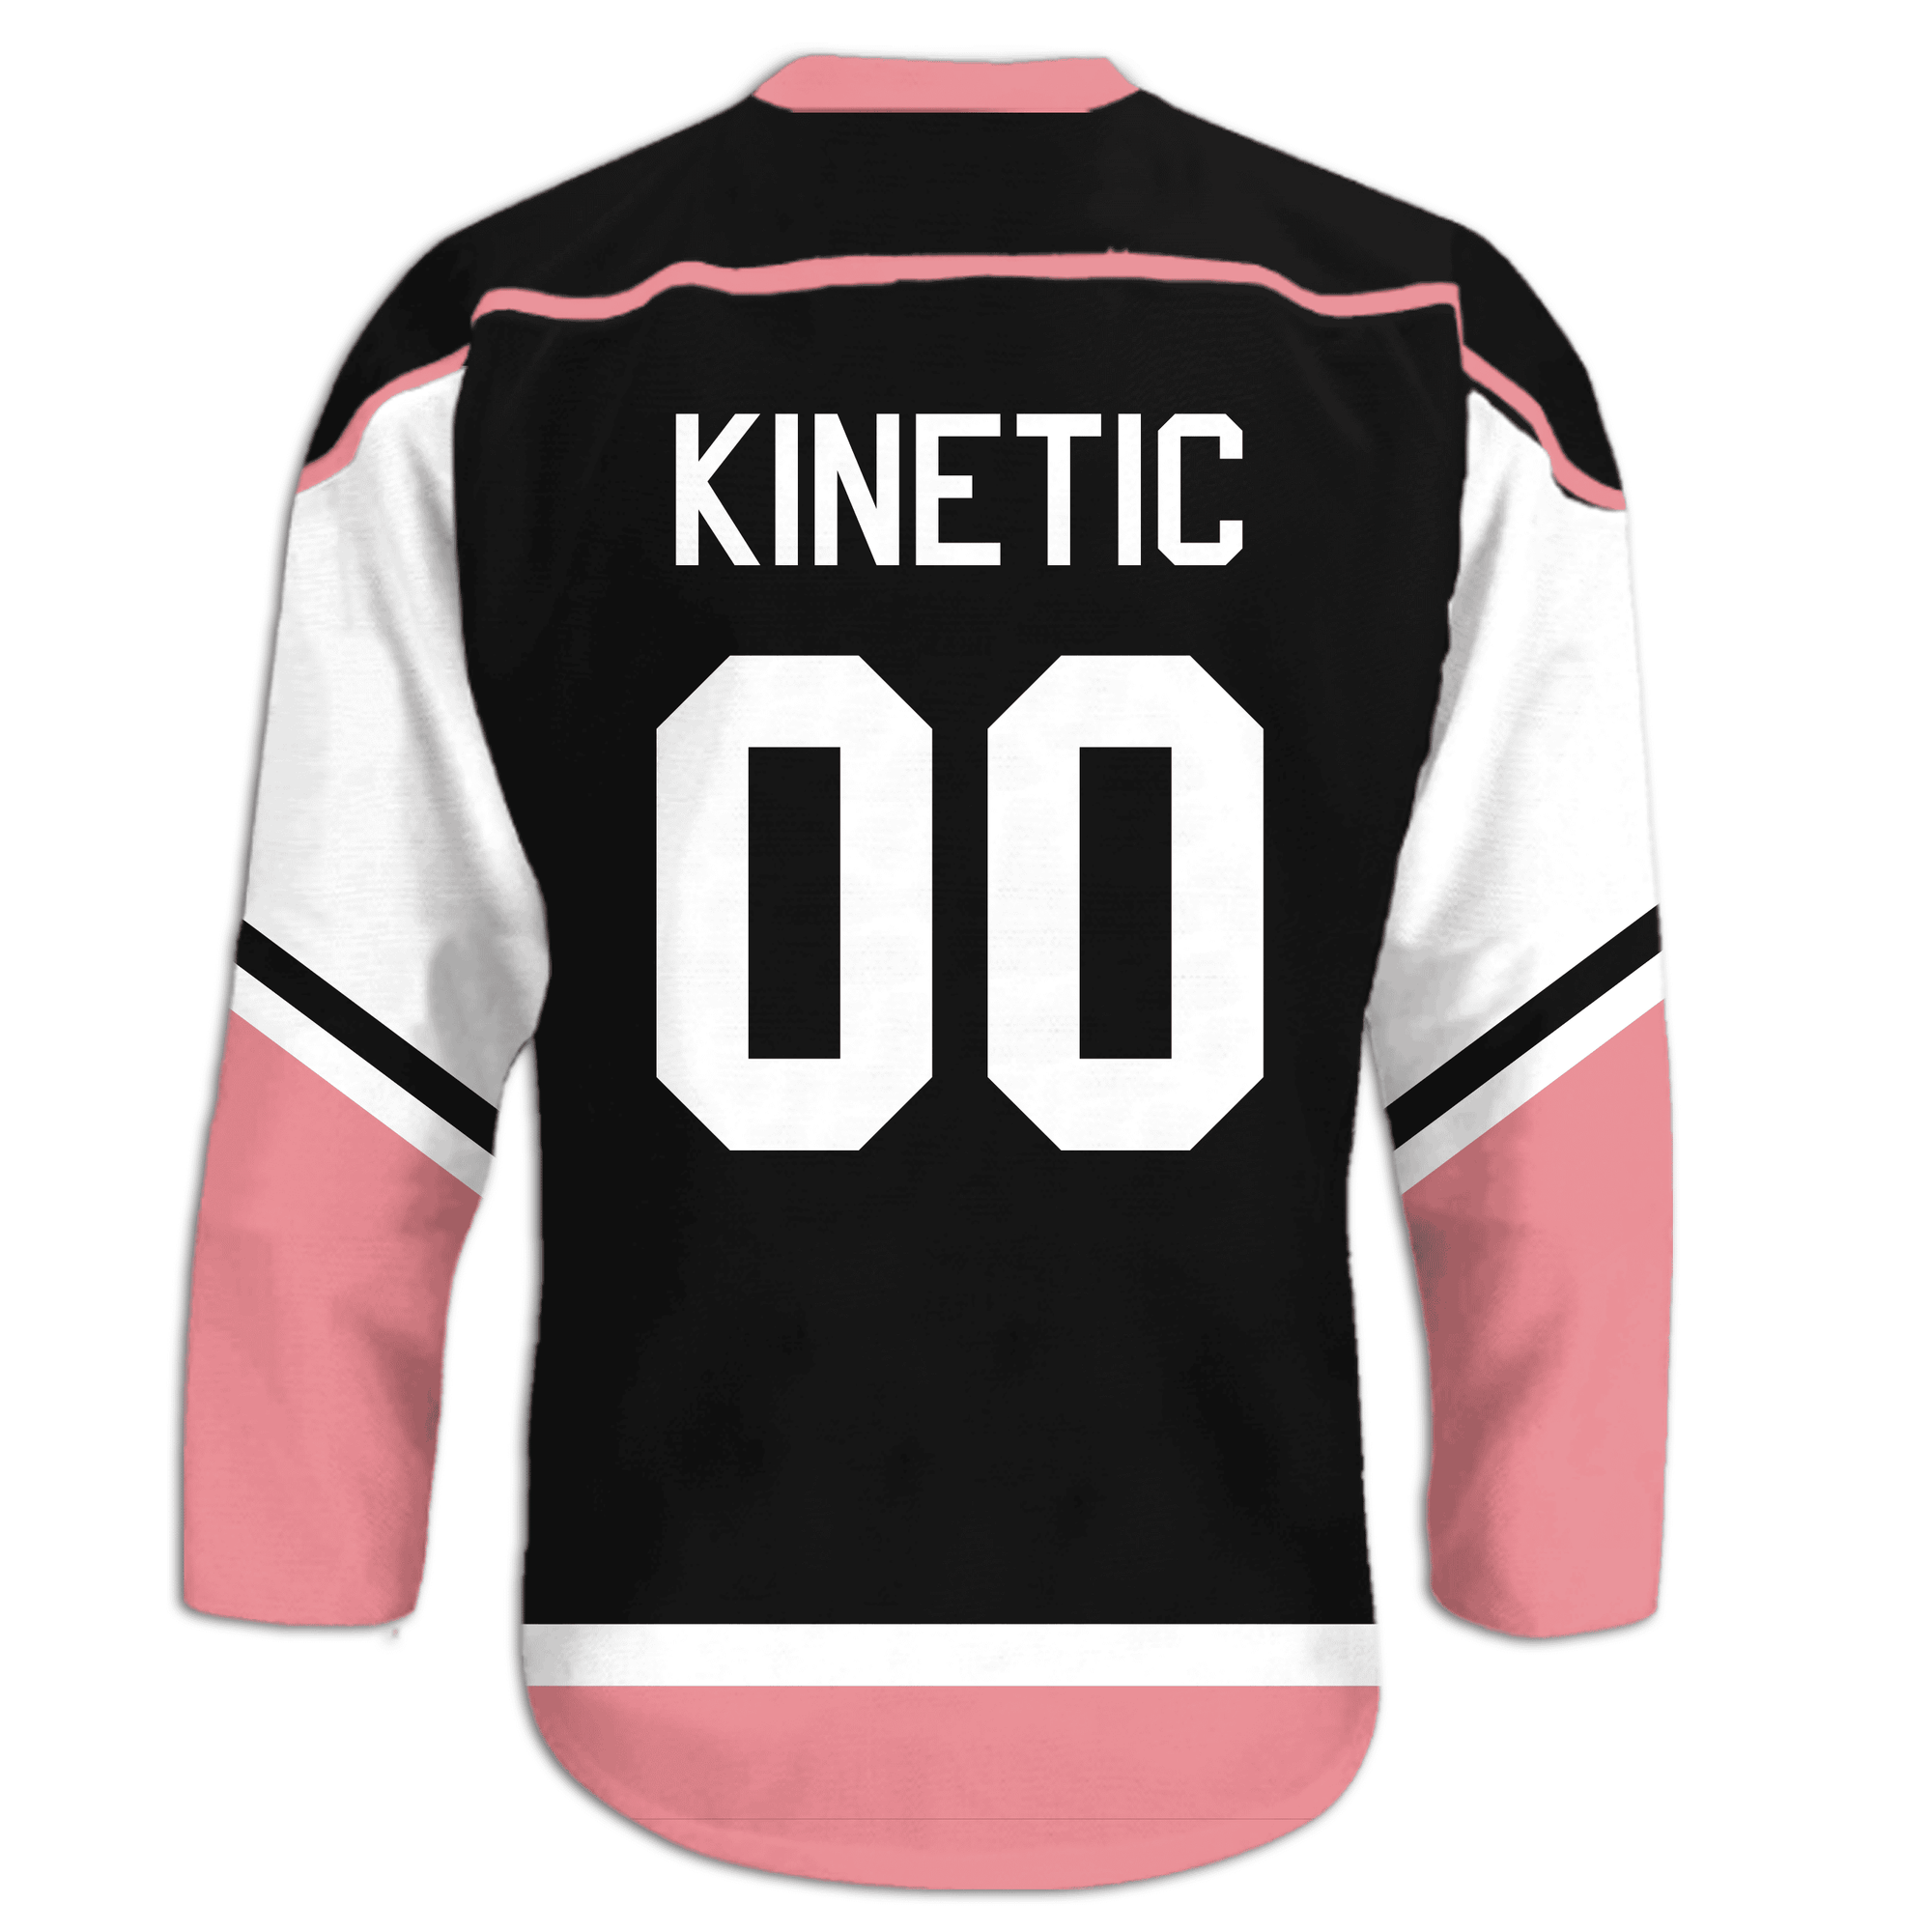 Theta Xi - Black Pink - Hockey Jersey